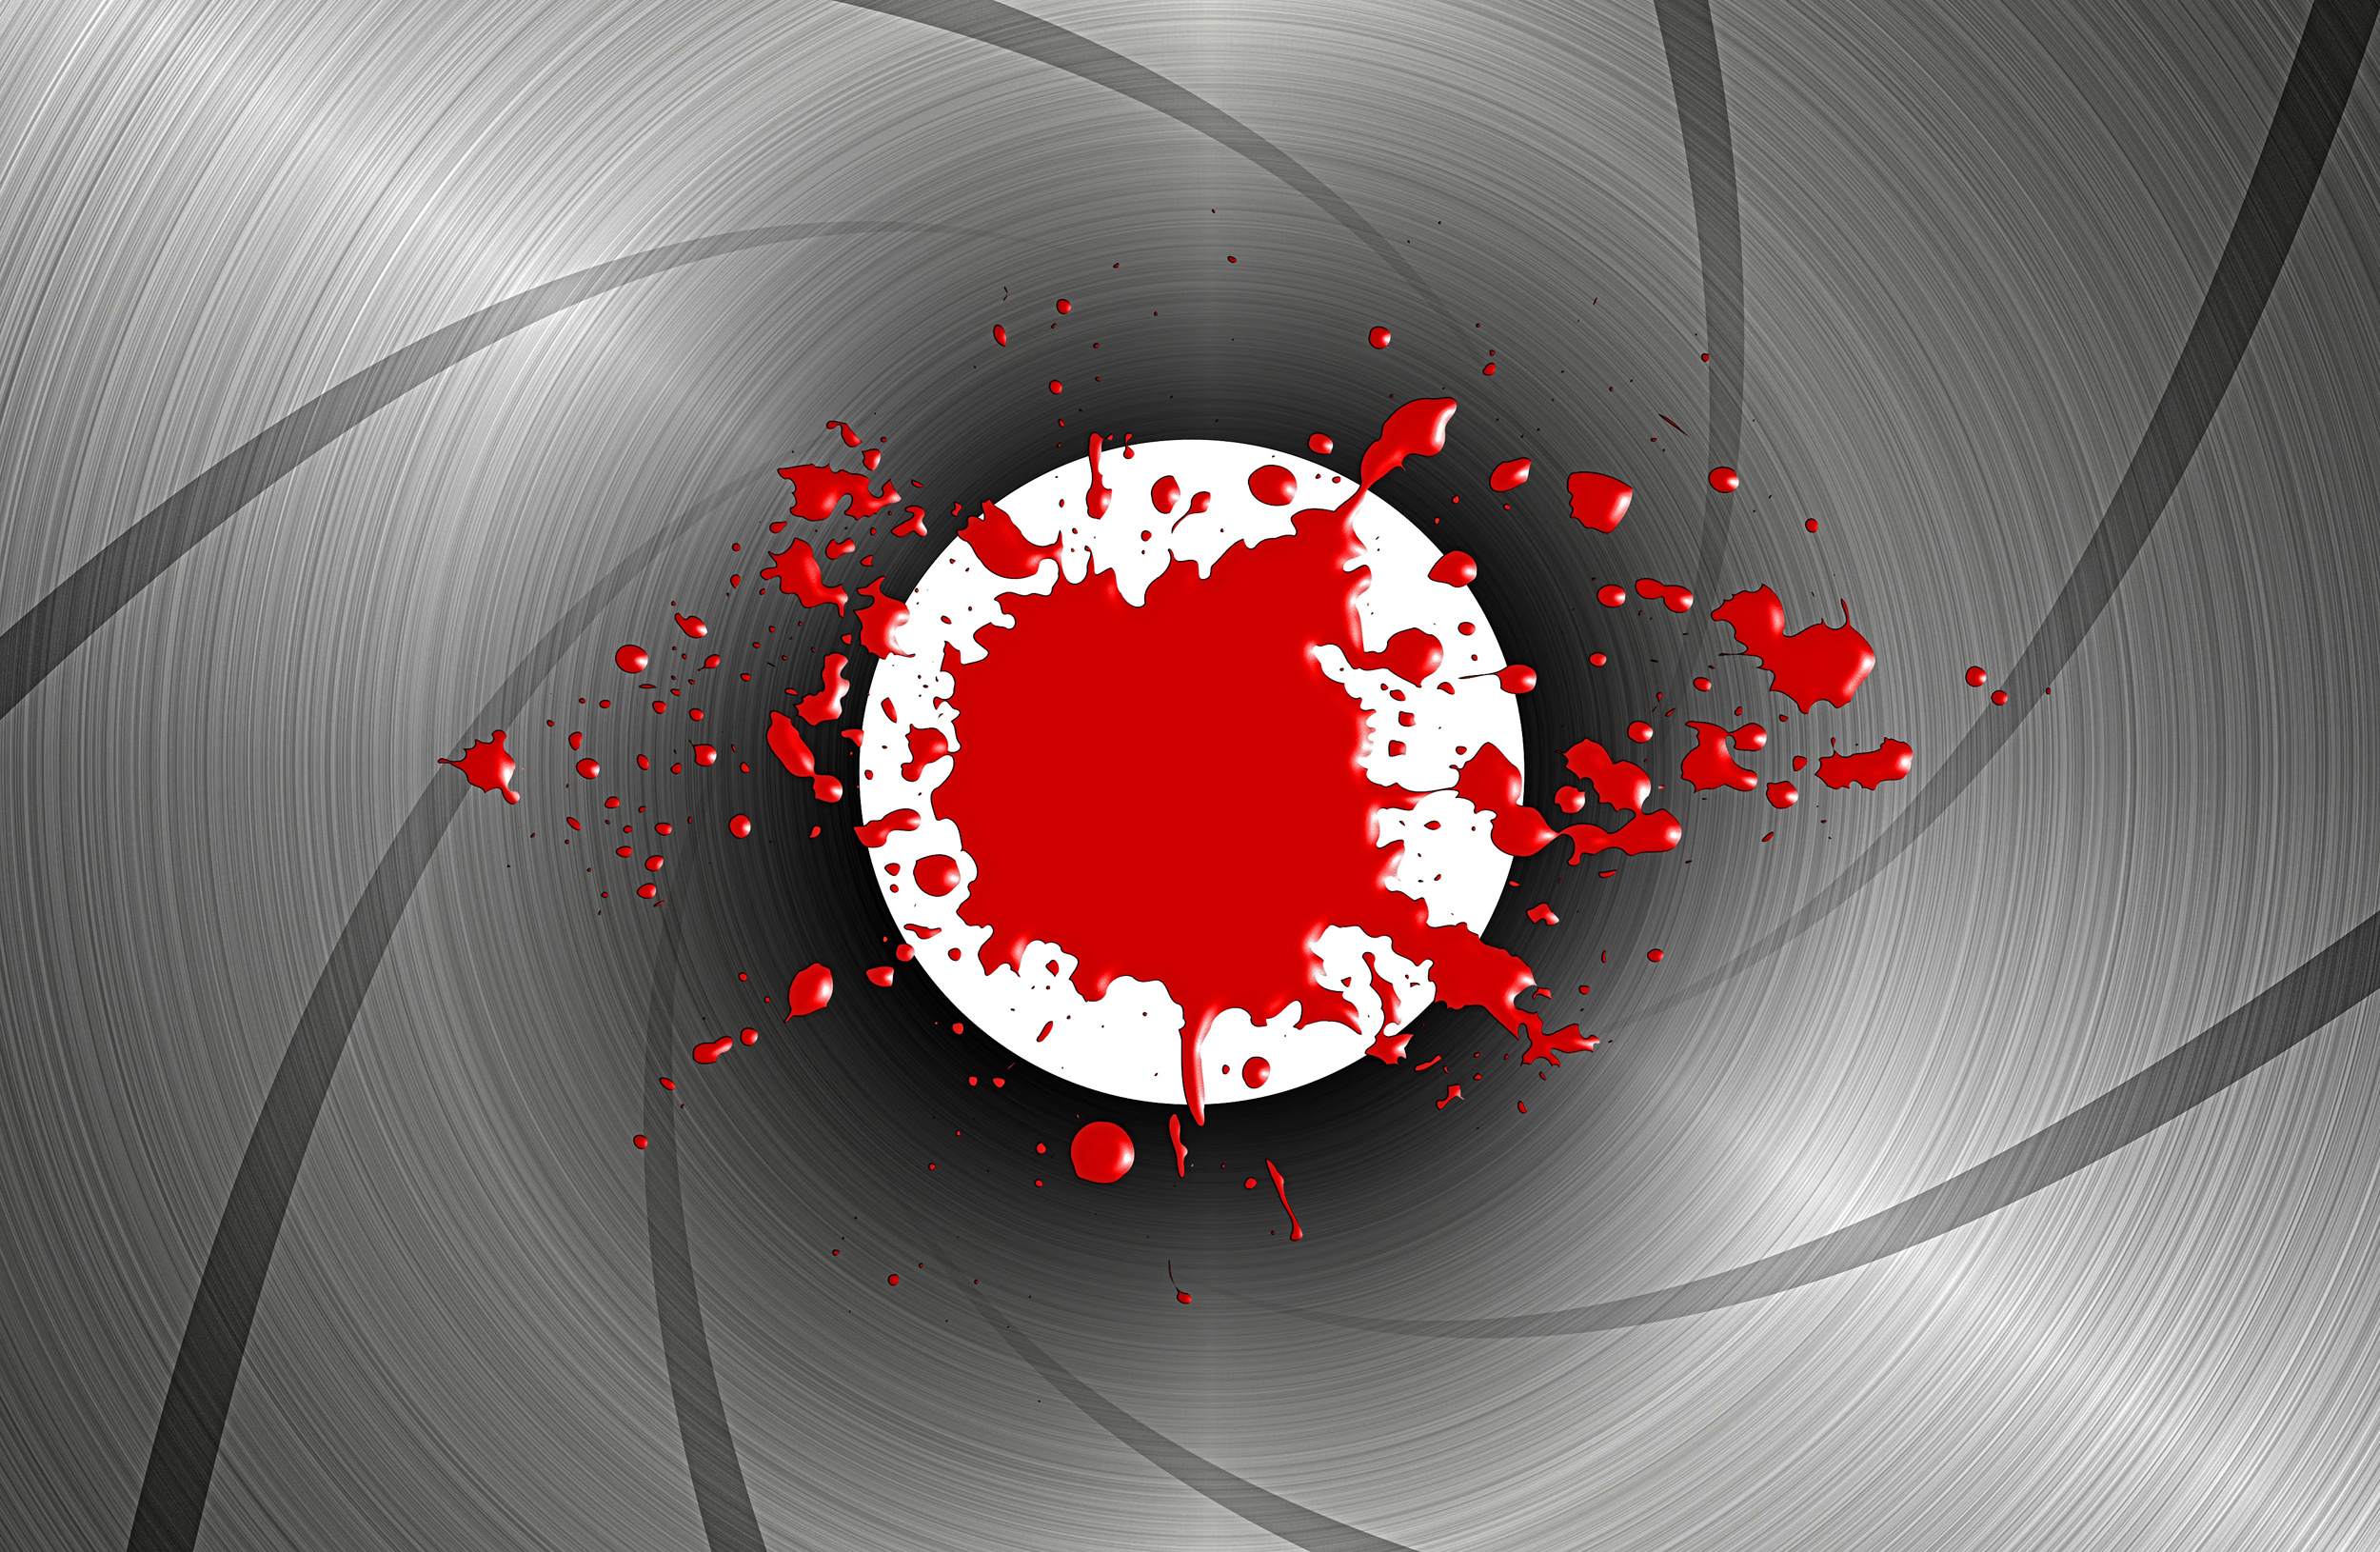 Blood spatter down the barrel of a gun - James Bond-style, 3d, Shot, Shopping, Shoot, HQ Photo